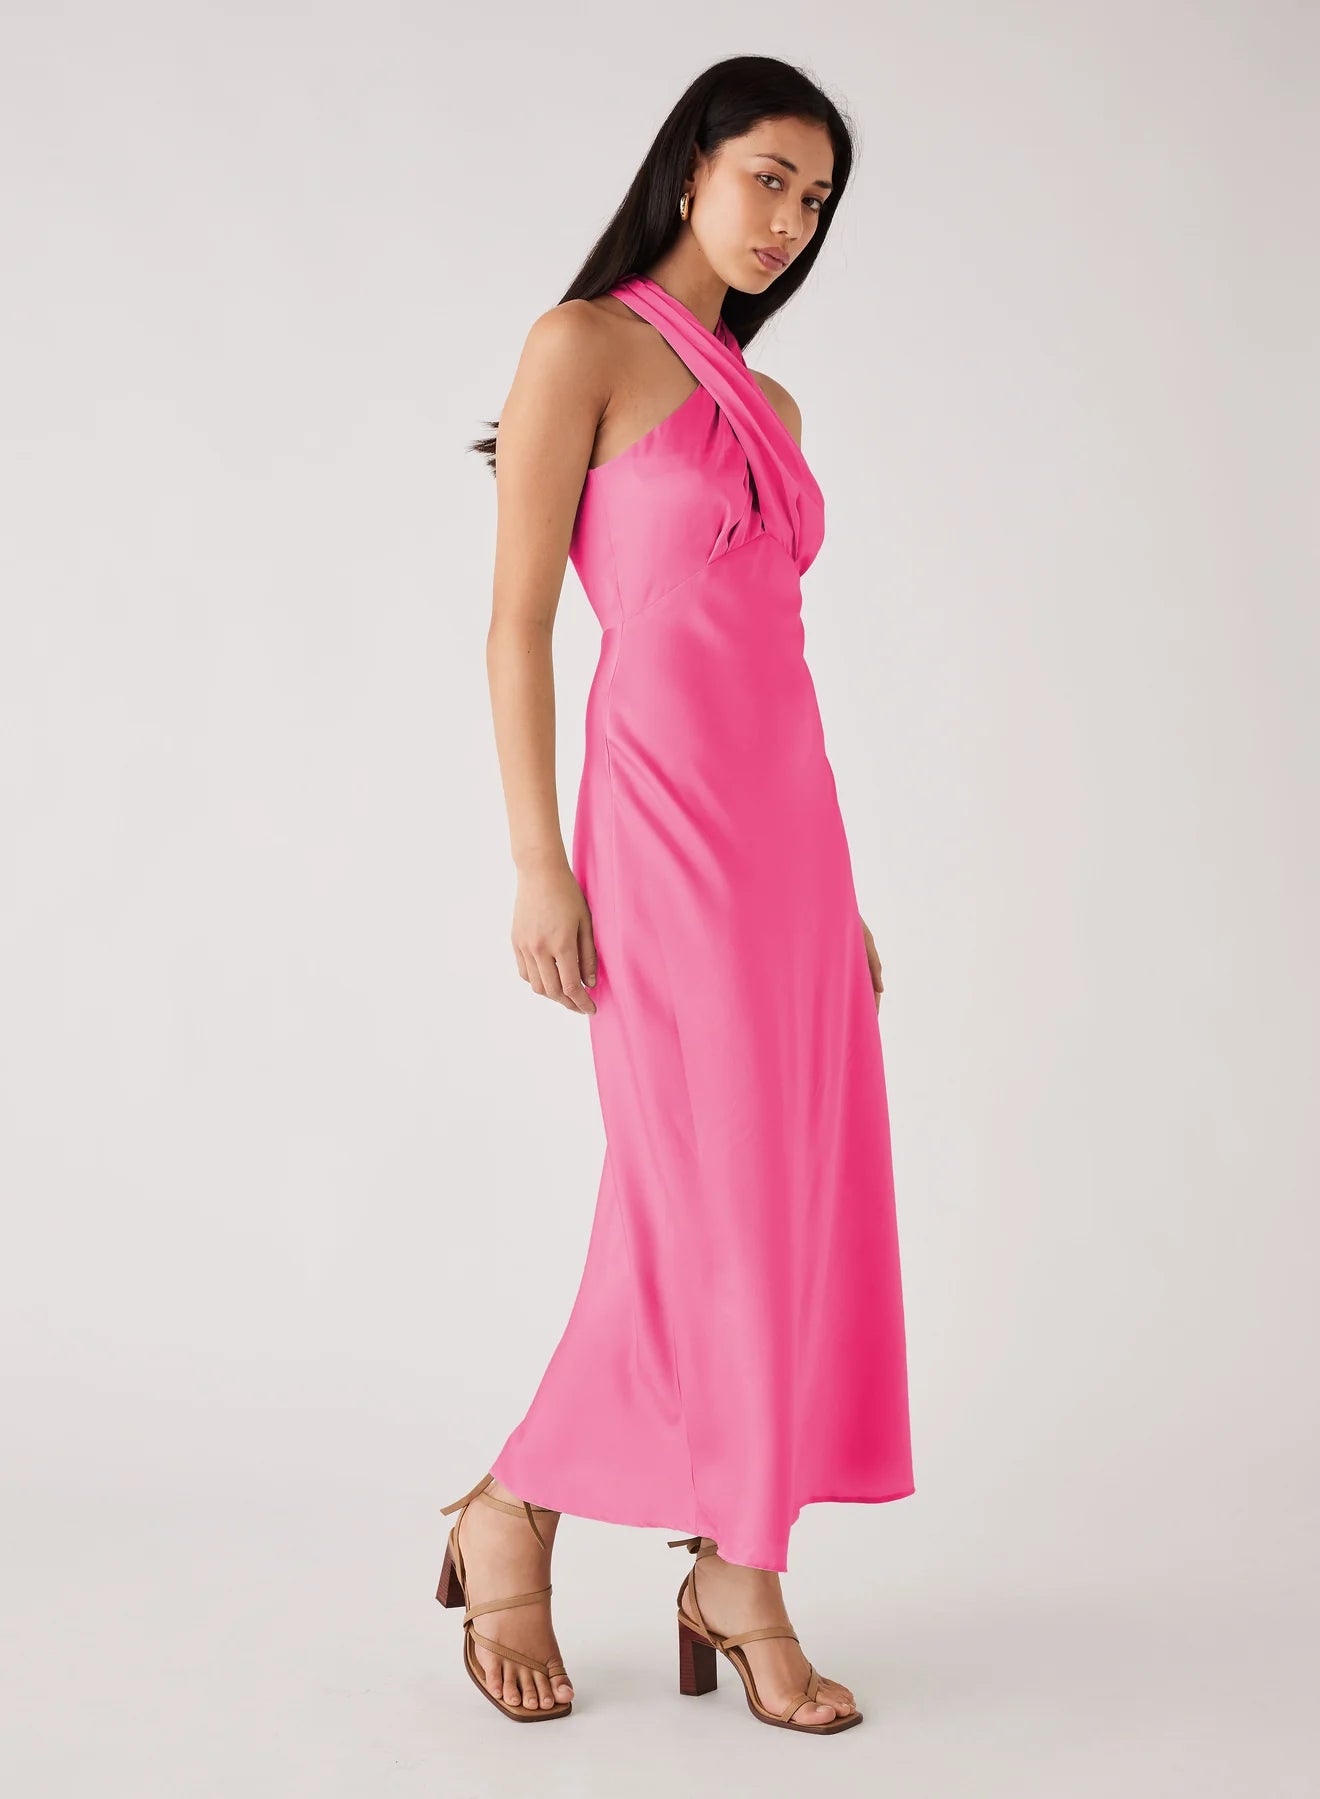 Esmaee Paris Midi Dress - Pink